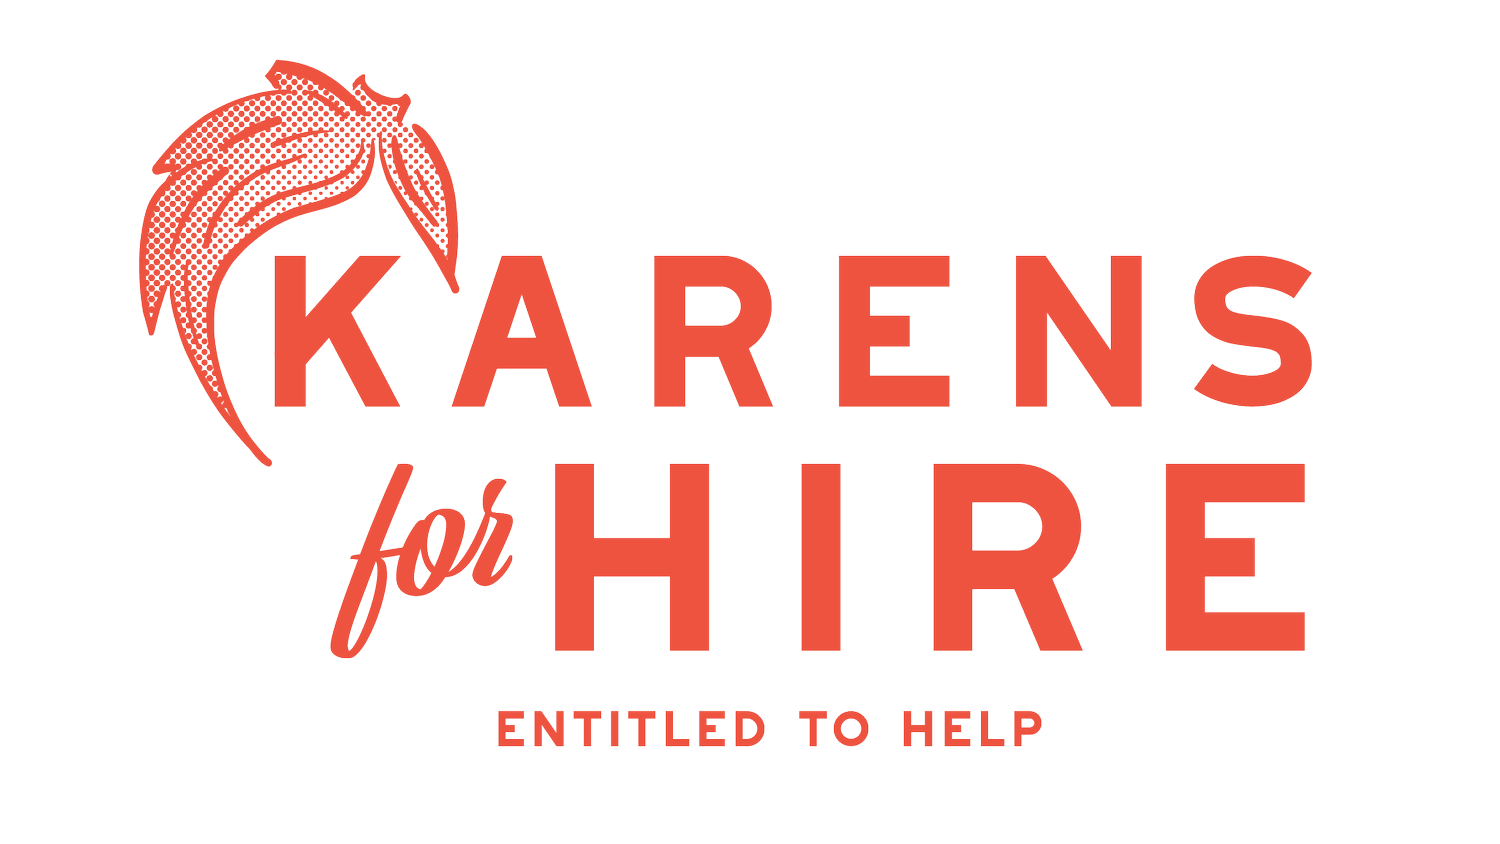 www.karensforhire.com